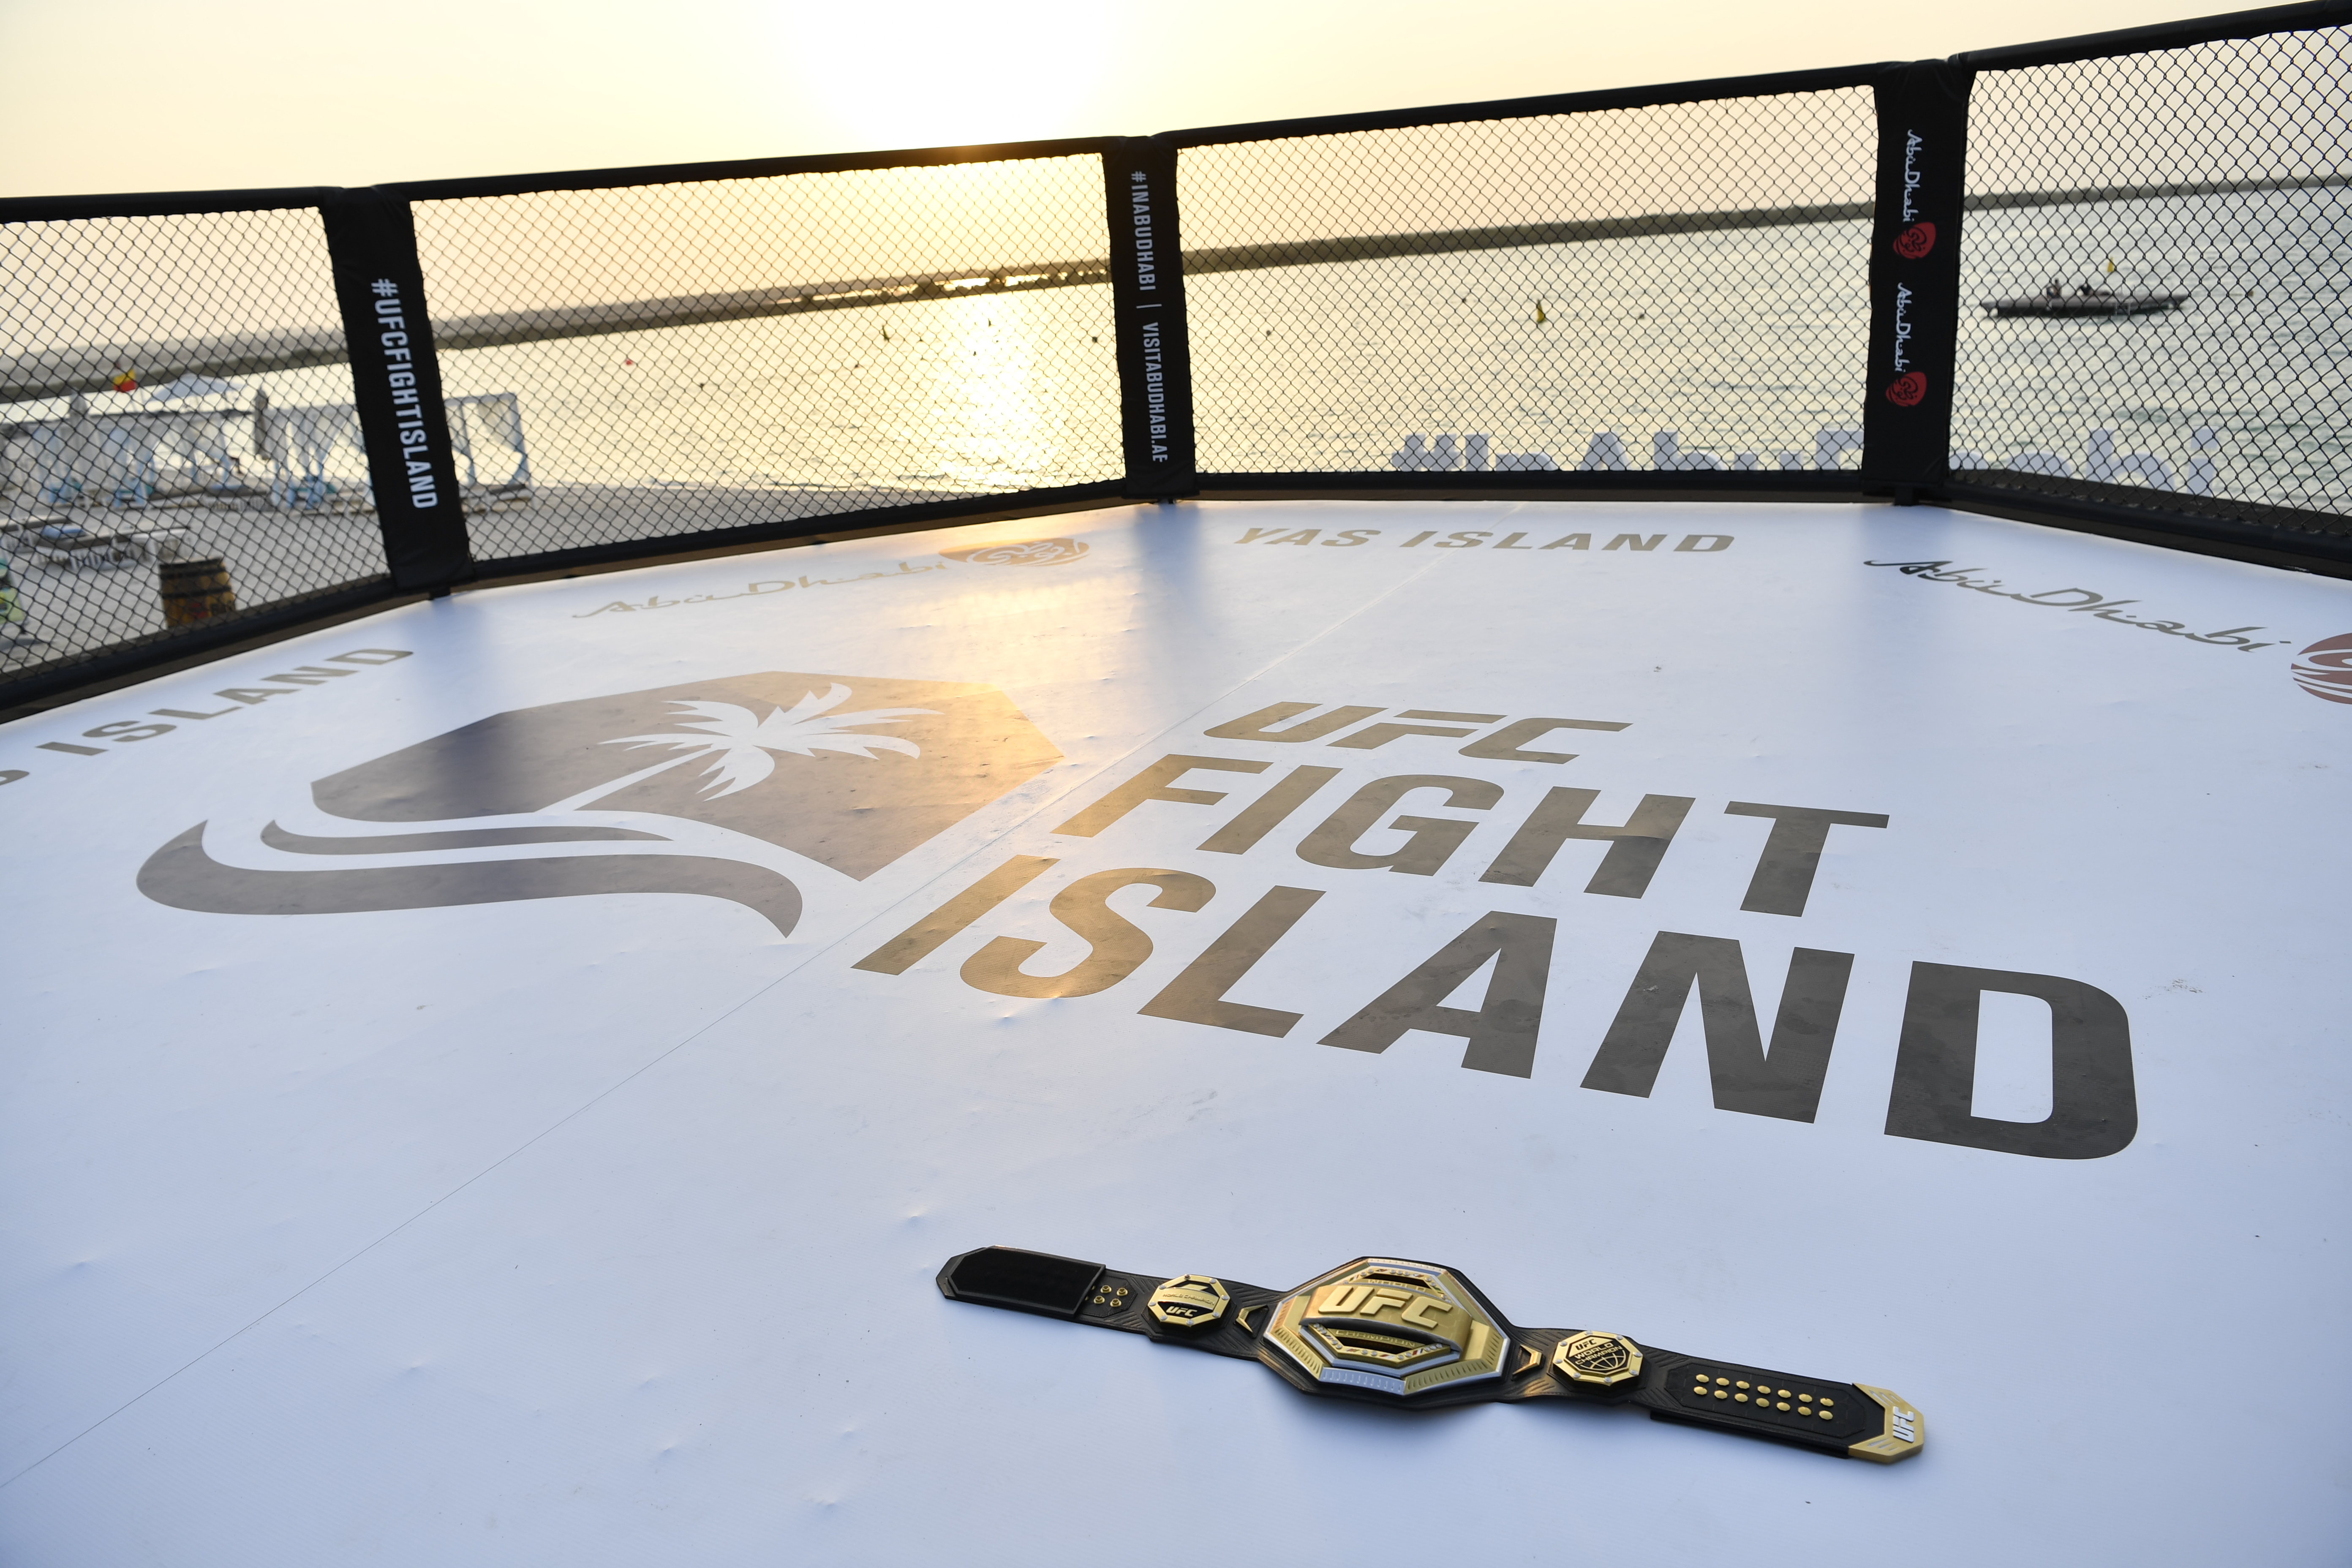 UFC Fight Island Previews